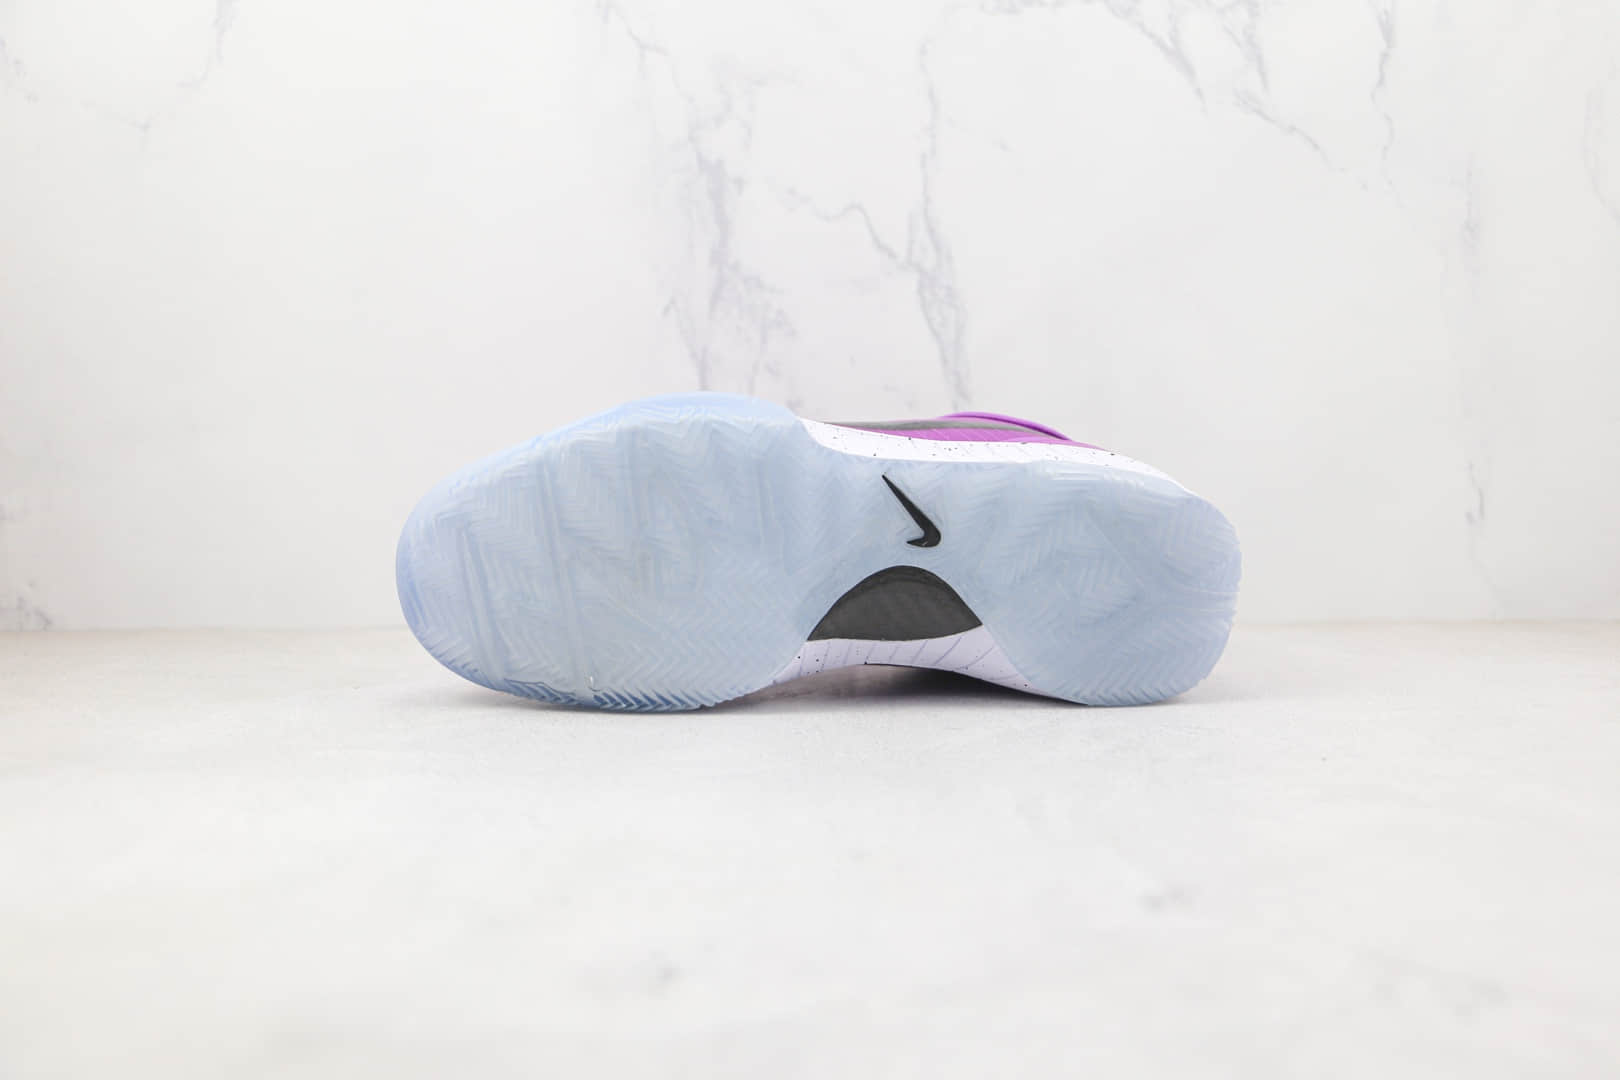 Nike Kobe 4 Protro 'Court Purple' CQ3869-500 - Undefeated Collaboration